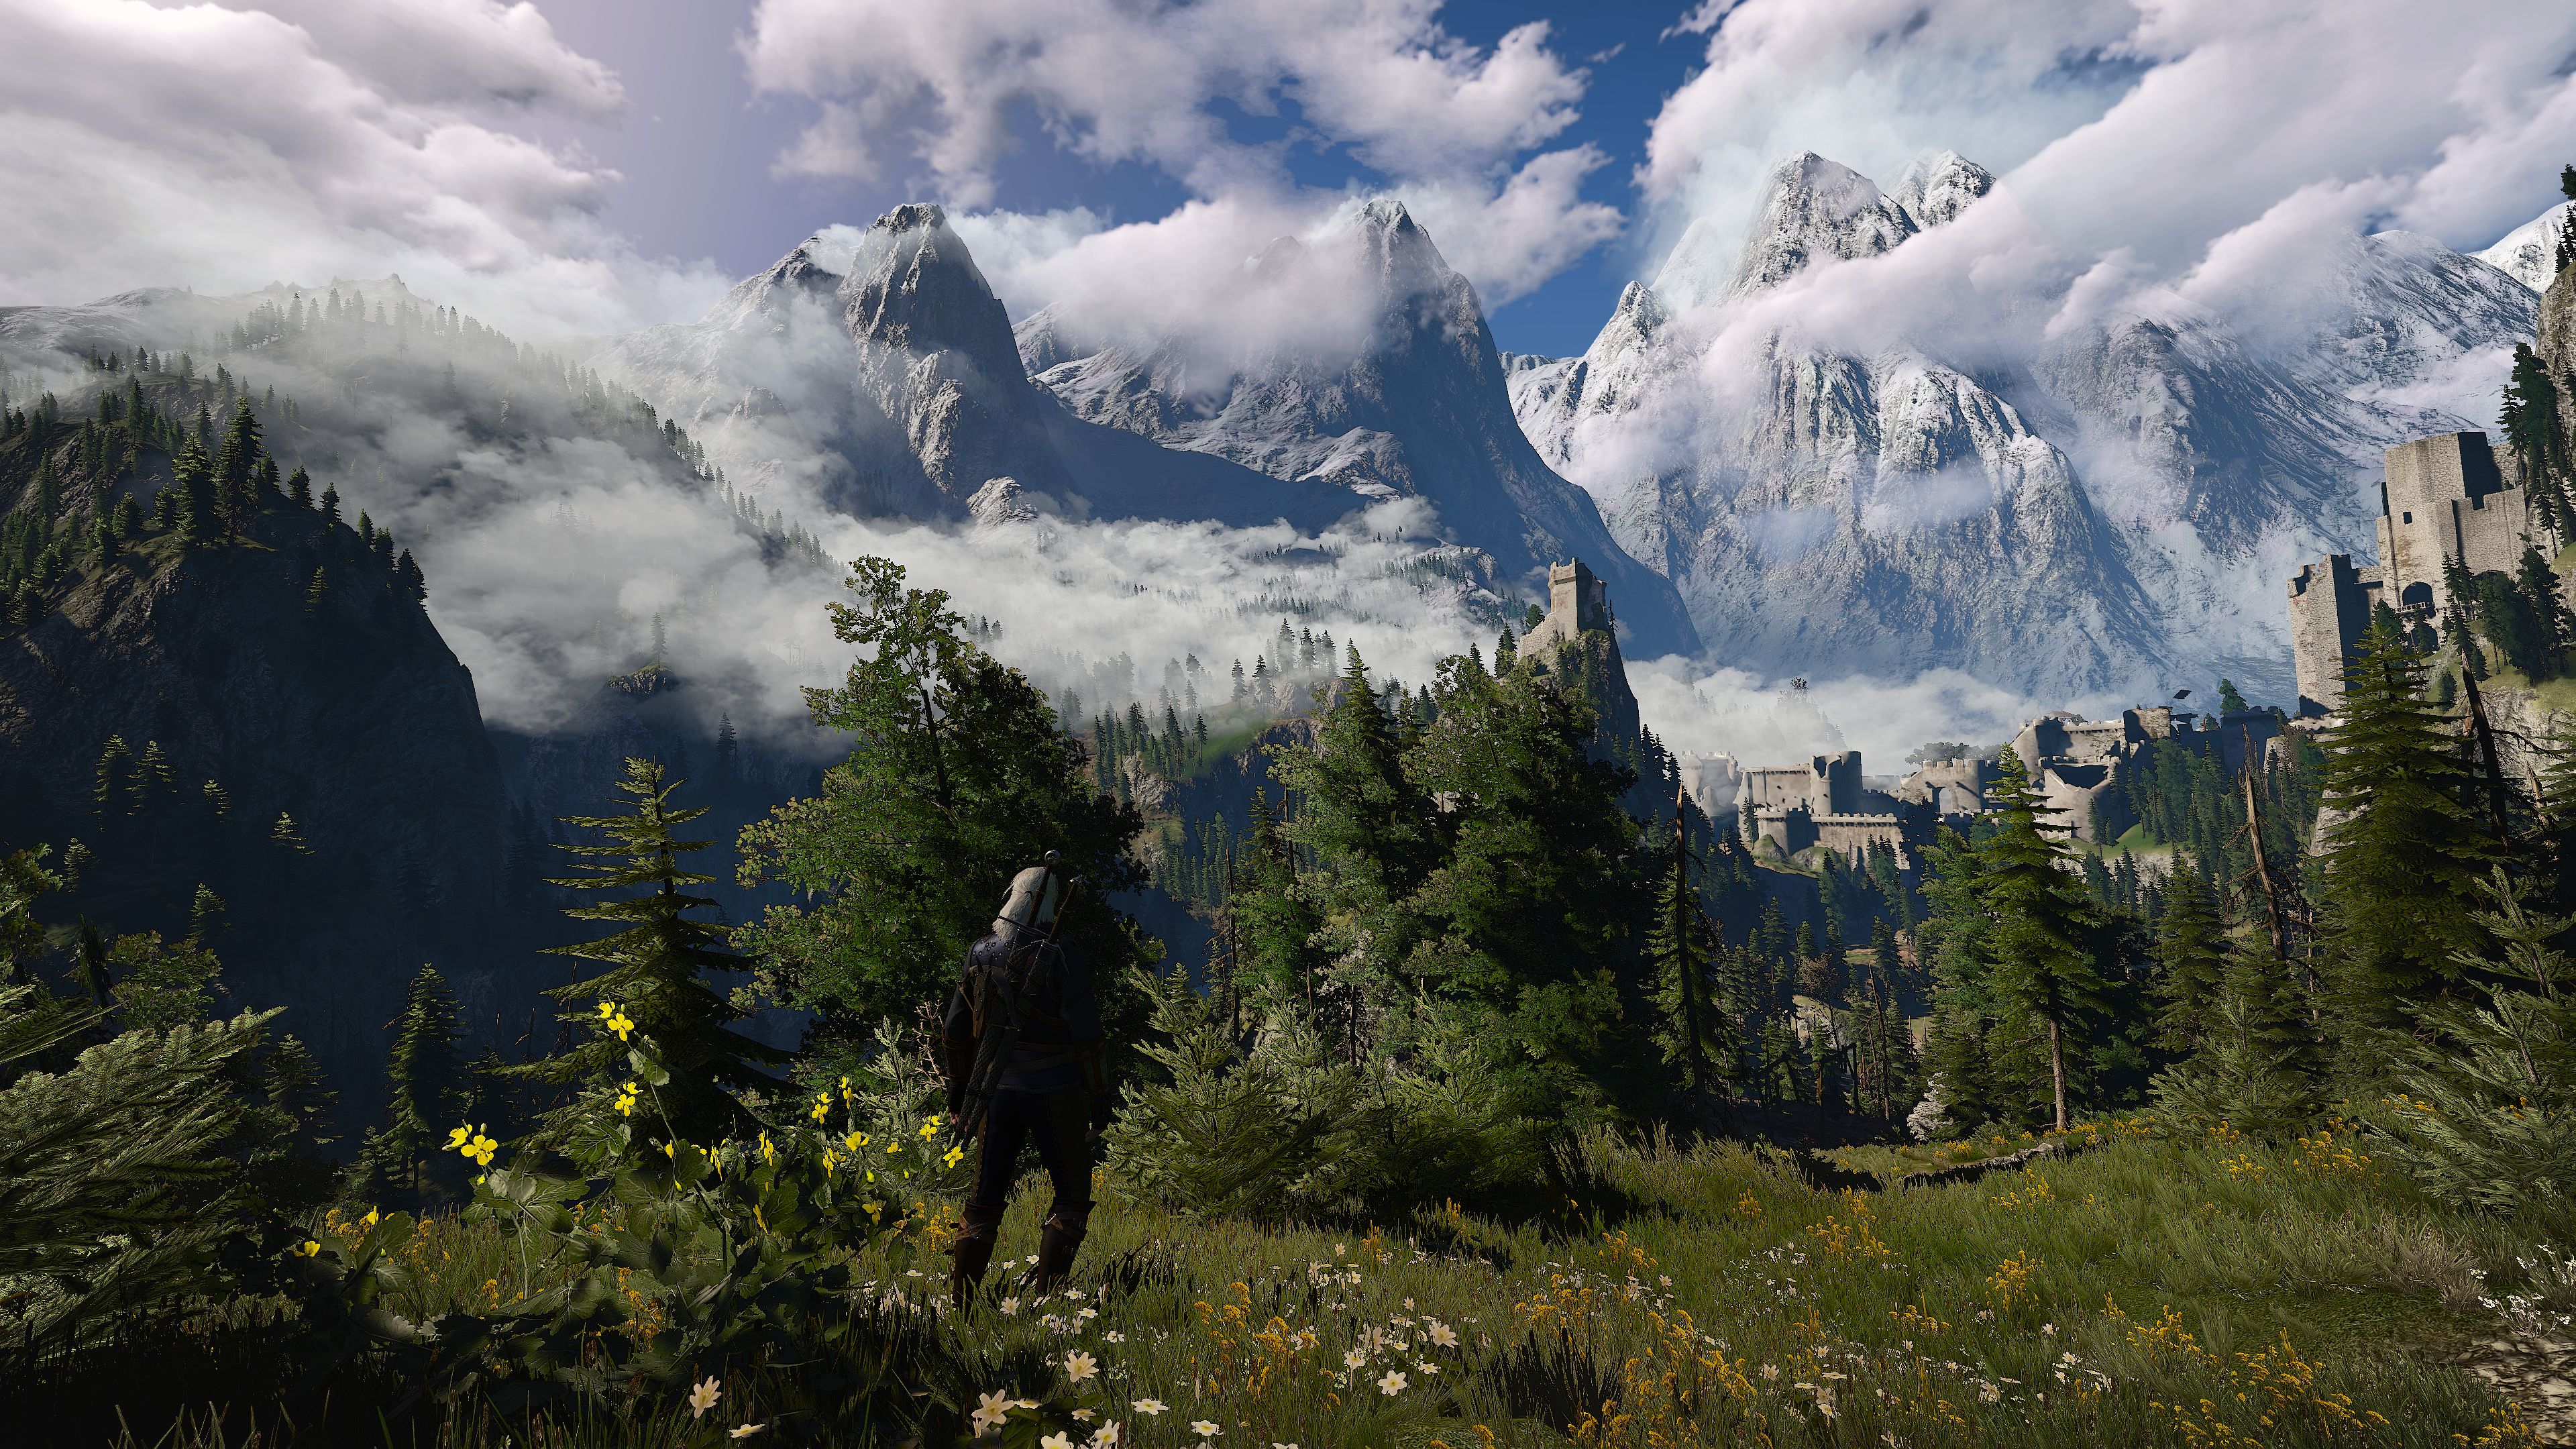 Geralt surveys the mountains around Kaer Morhen